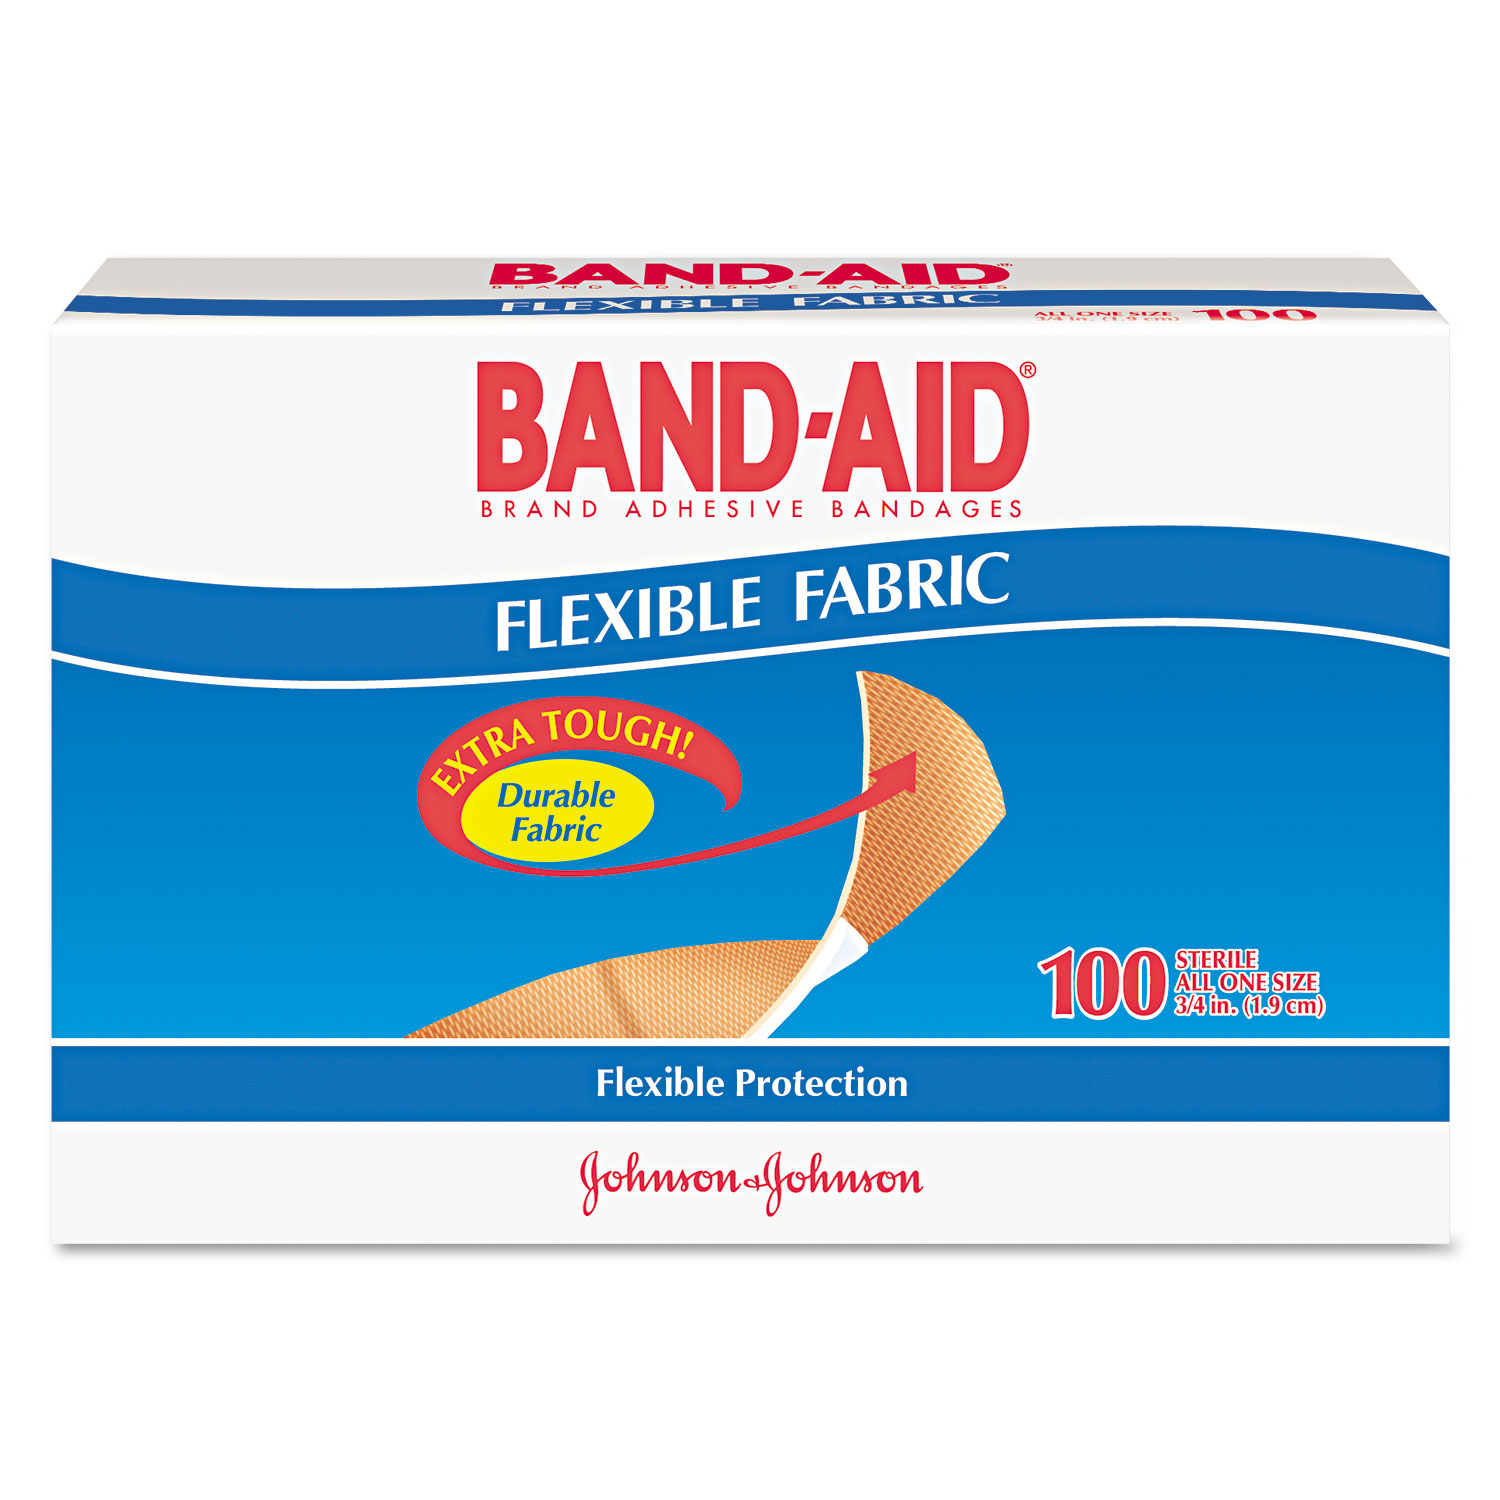 Flexible Fabric Premium Adhesive Bandages, 3/4